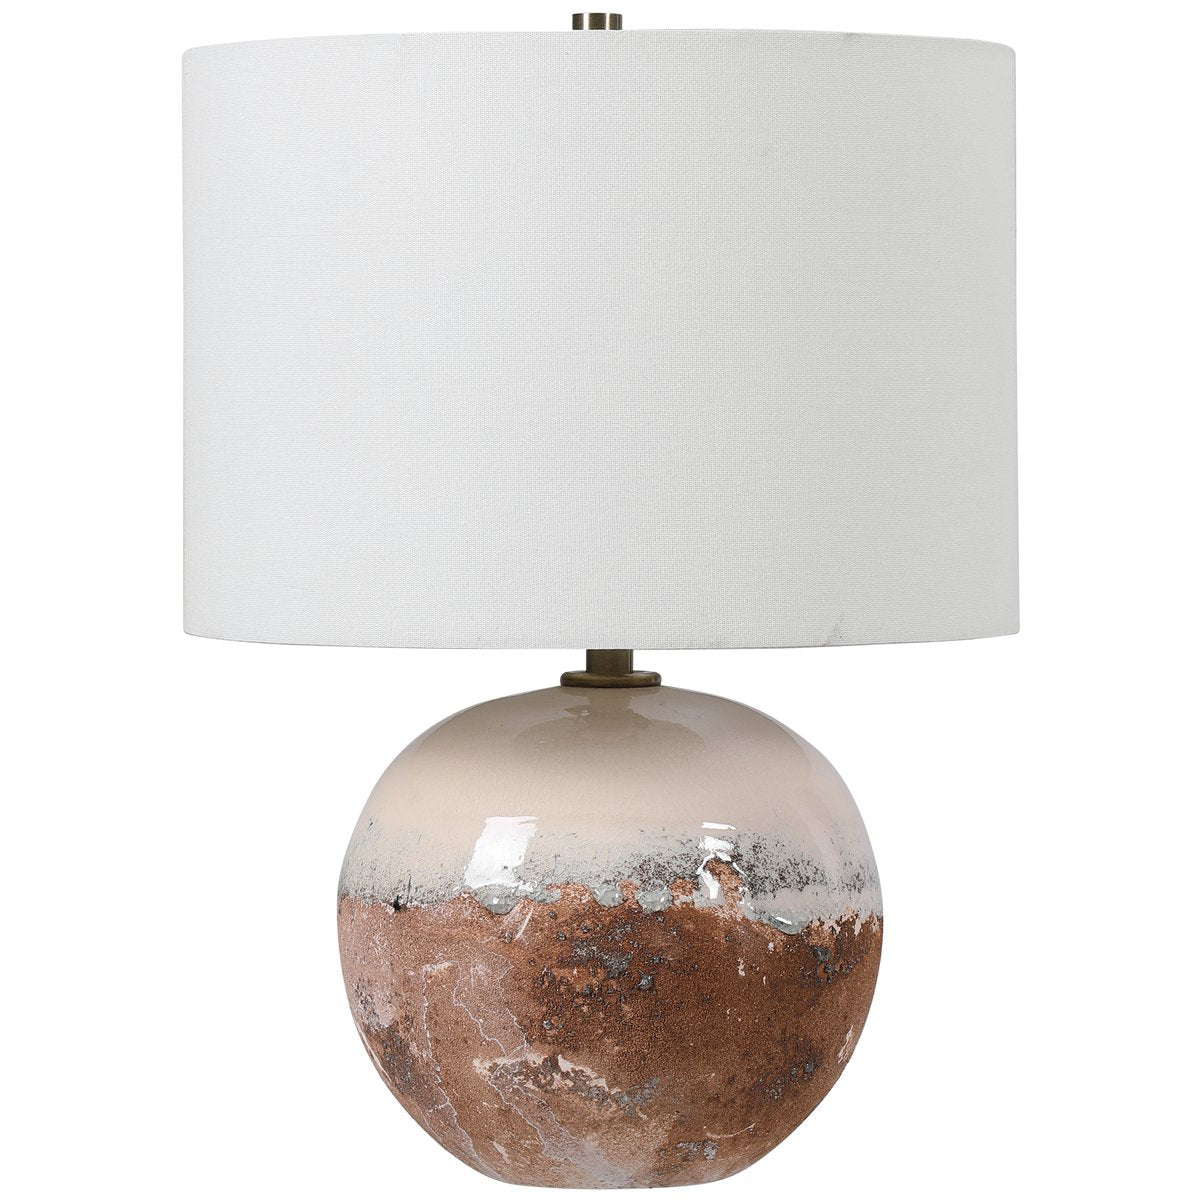 Uttermost Durango Terracotta Accent Lamp